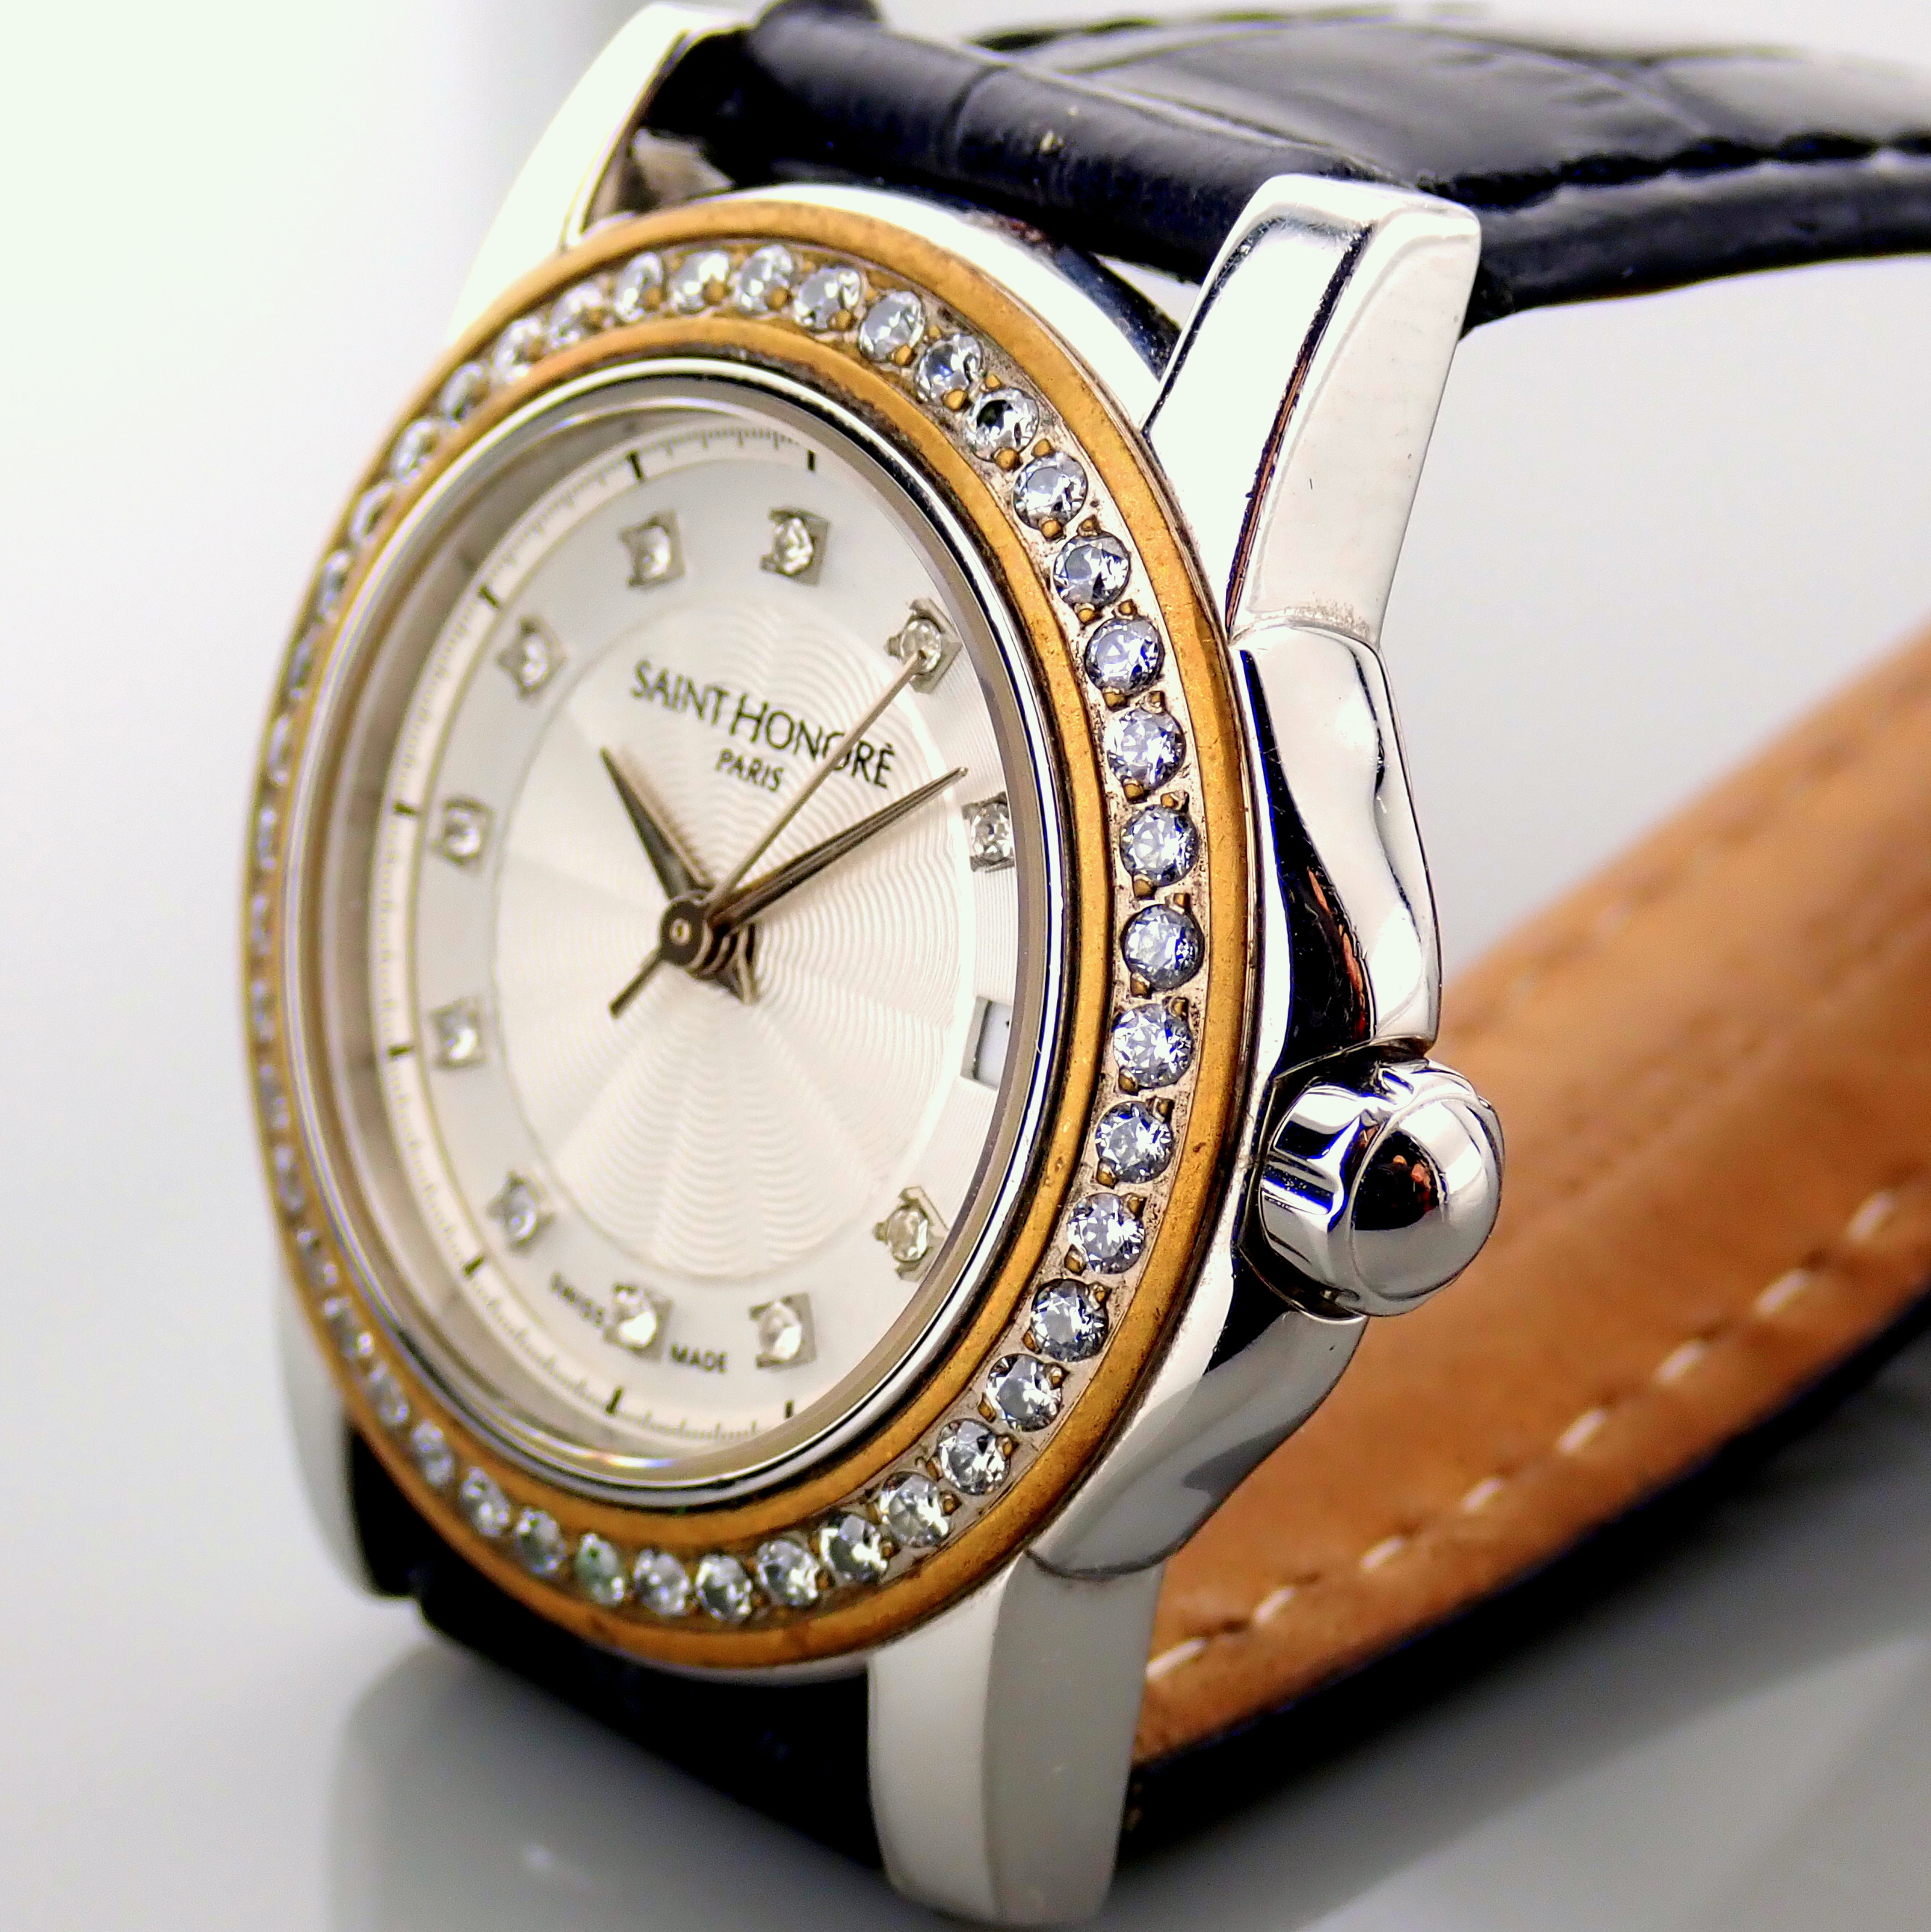 Saint Honore / Diamond - Lady's Gold/Steel Wrist Watch - Image 5 of 12